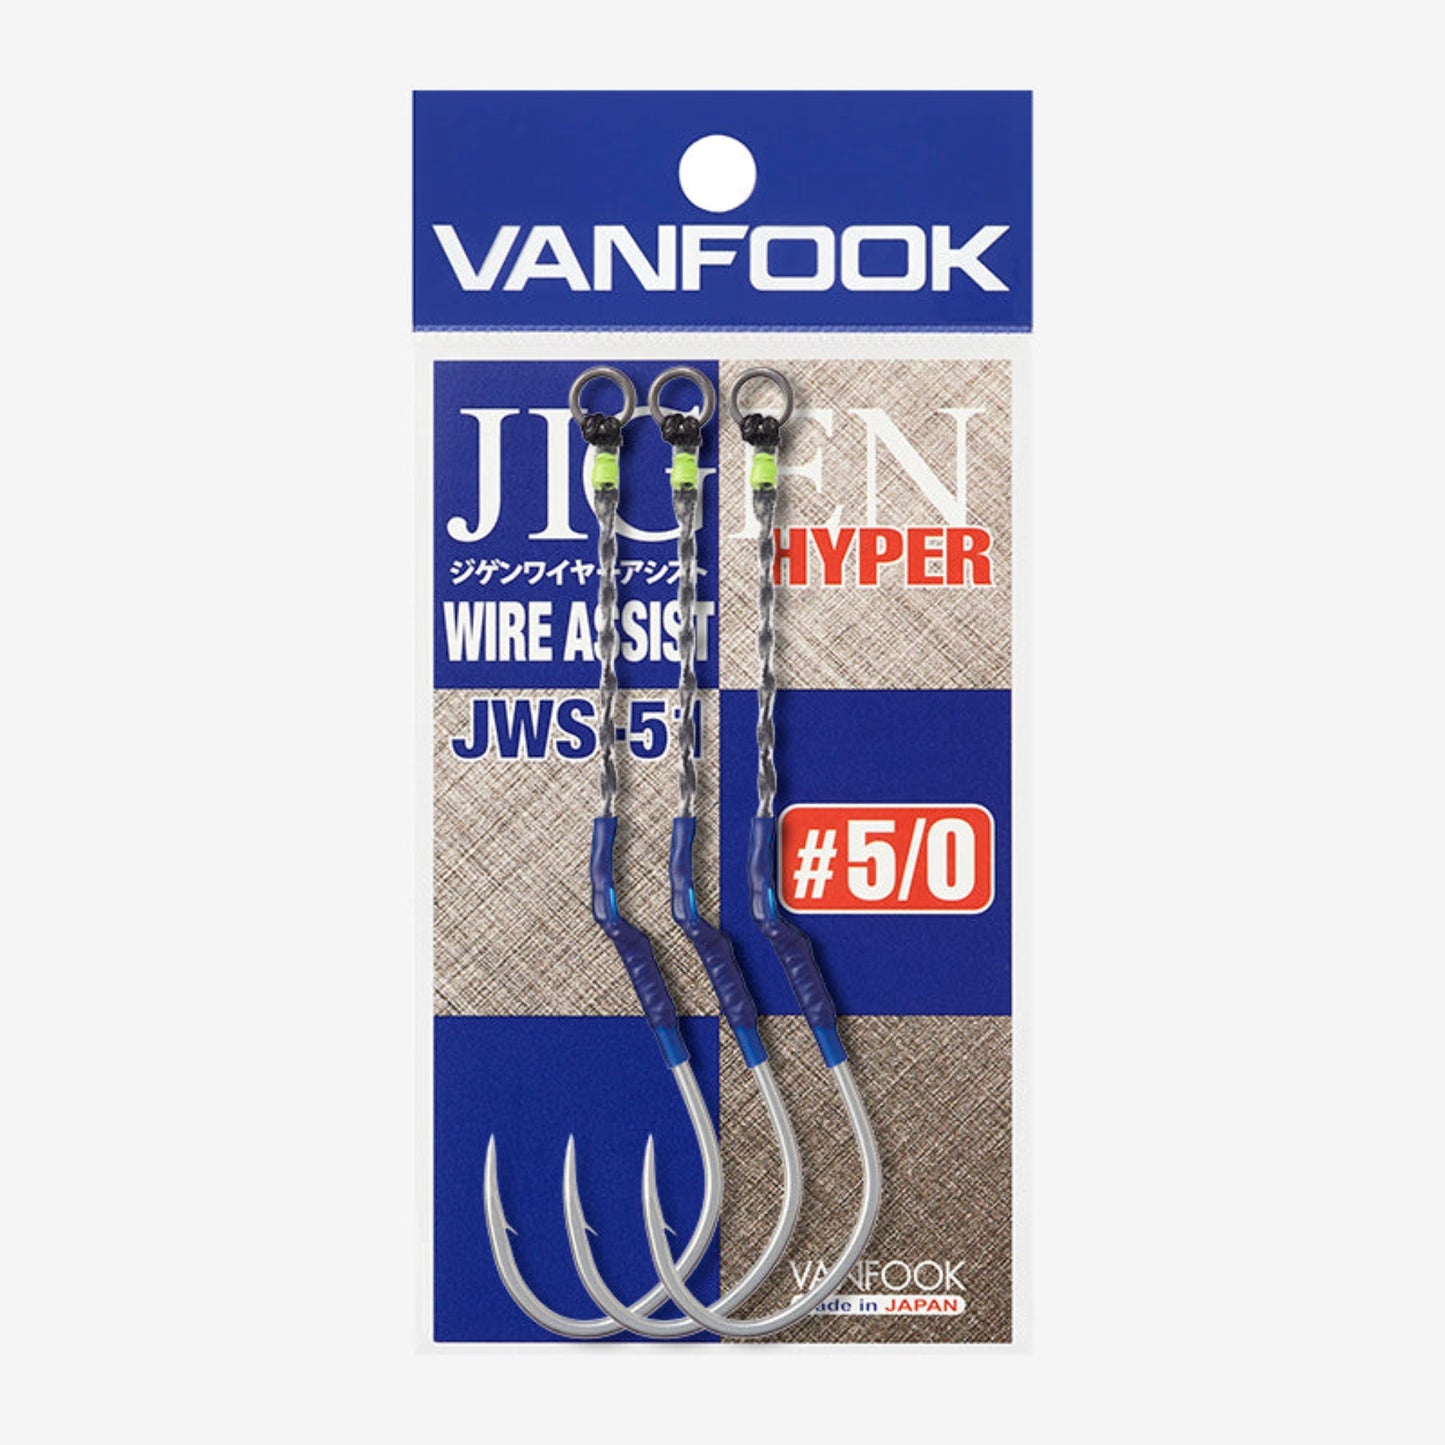 Vanfook Jigen Wire Assist JWS-51